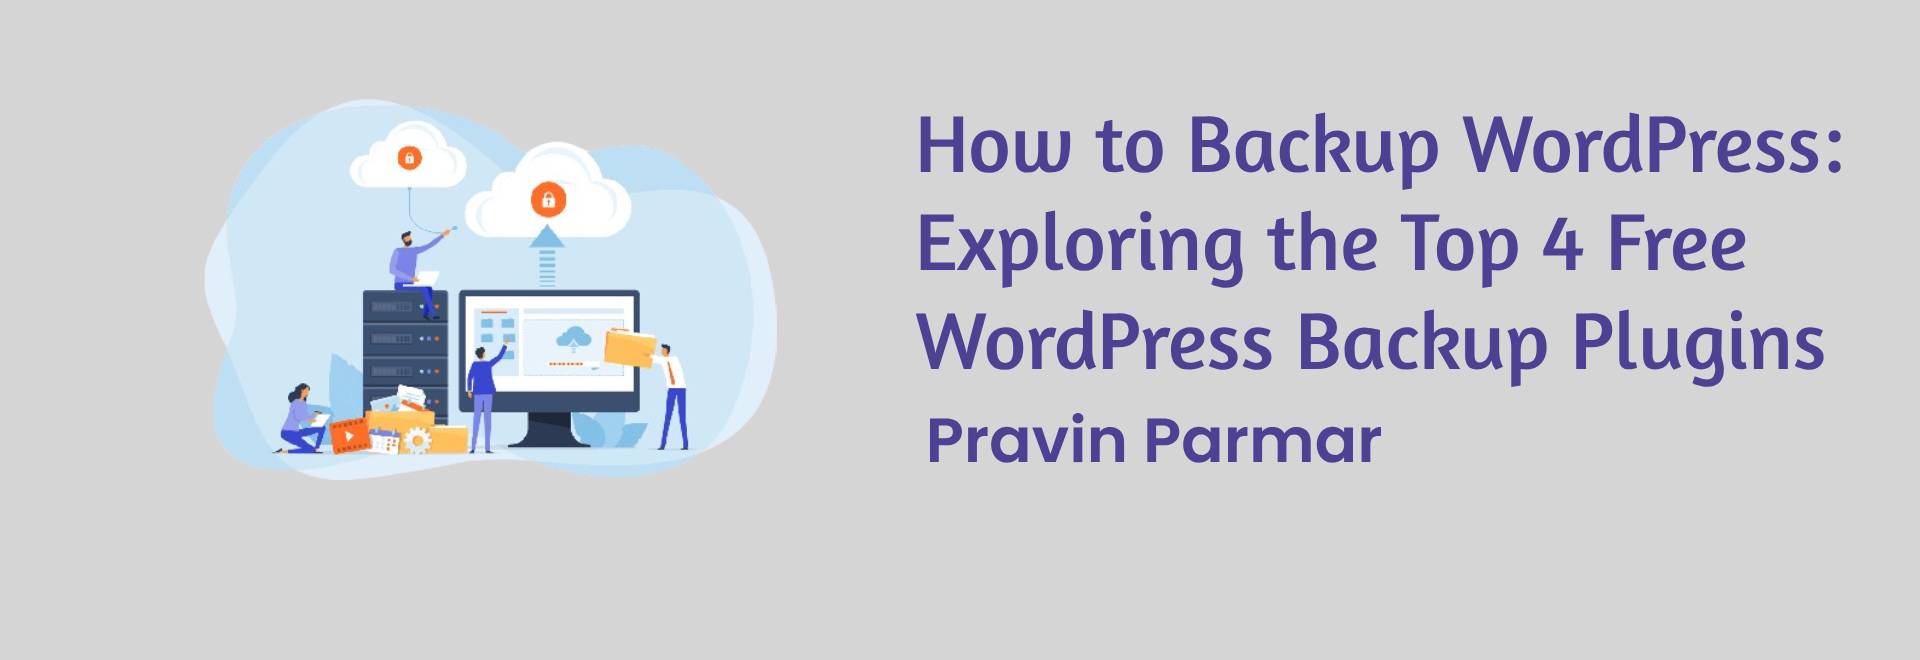 How to Backup WordPress: Exploring the Top 4 Free WordPress Backup Plugins